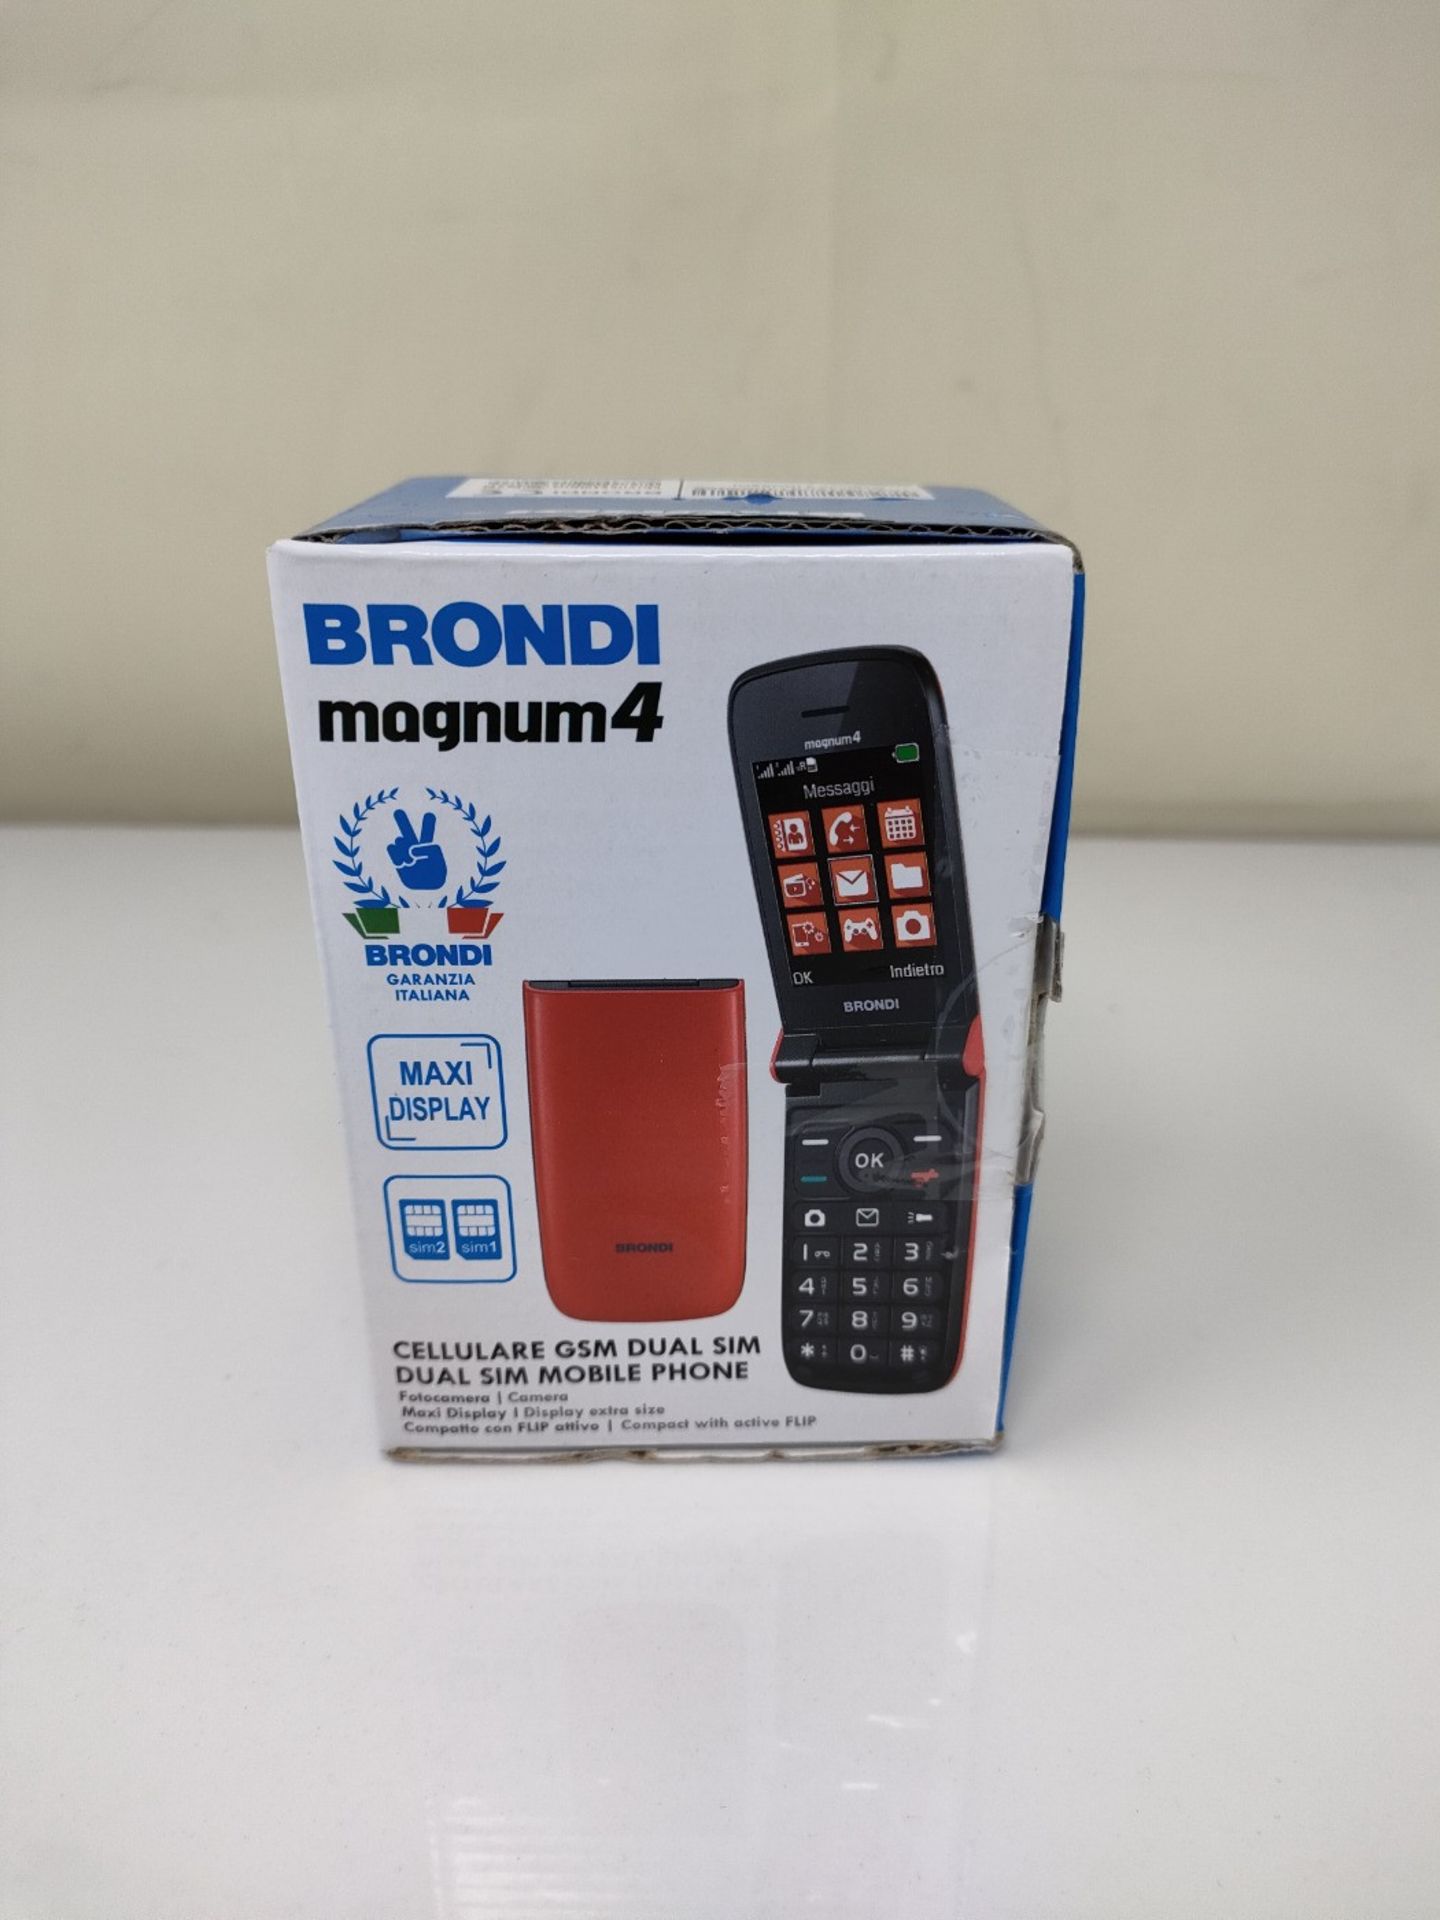 Brondi Magnum 4 Maxi Display Mobile Phone, Backlit Physical Keyboard, Dual Sim, 1.3 MP - Image 2 of 3